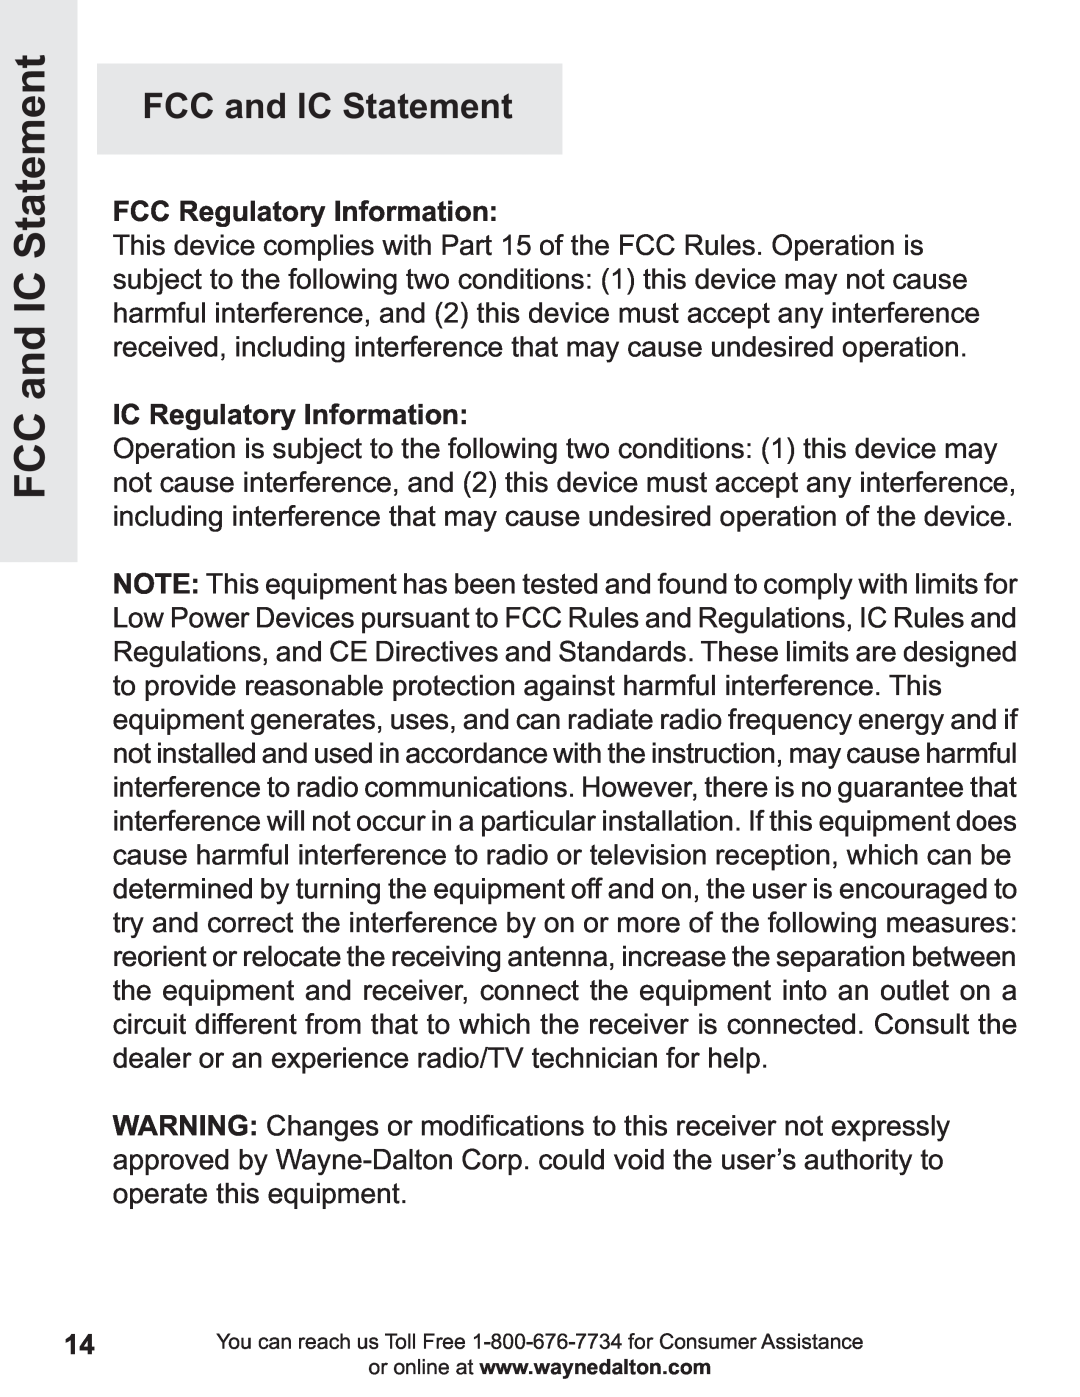 Wayne-Dalton GSM-12 operating instructions FCC and IC Statement, FCC Regulatory Information, IC Regulatory Information 